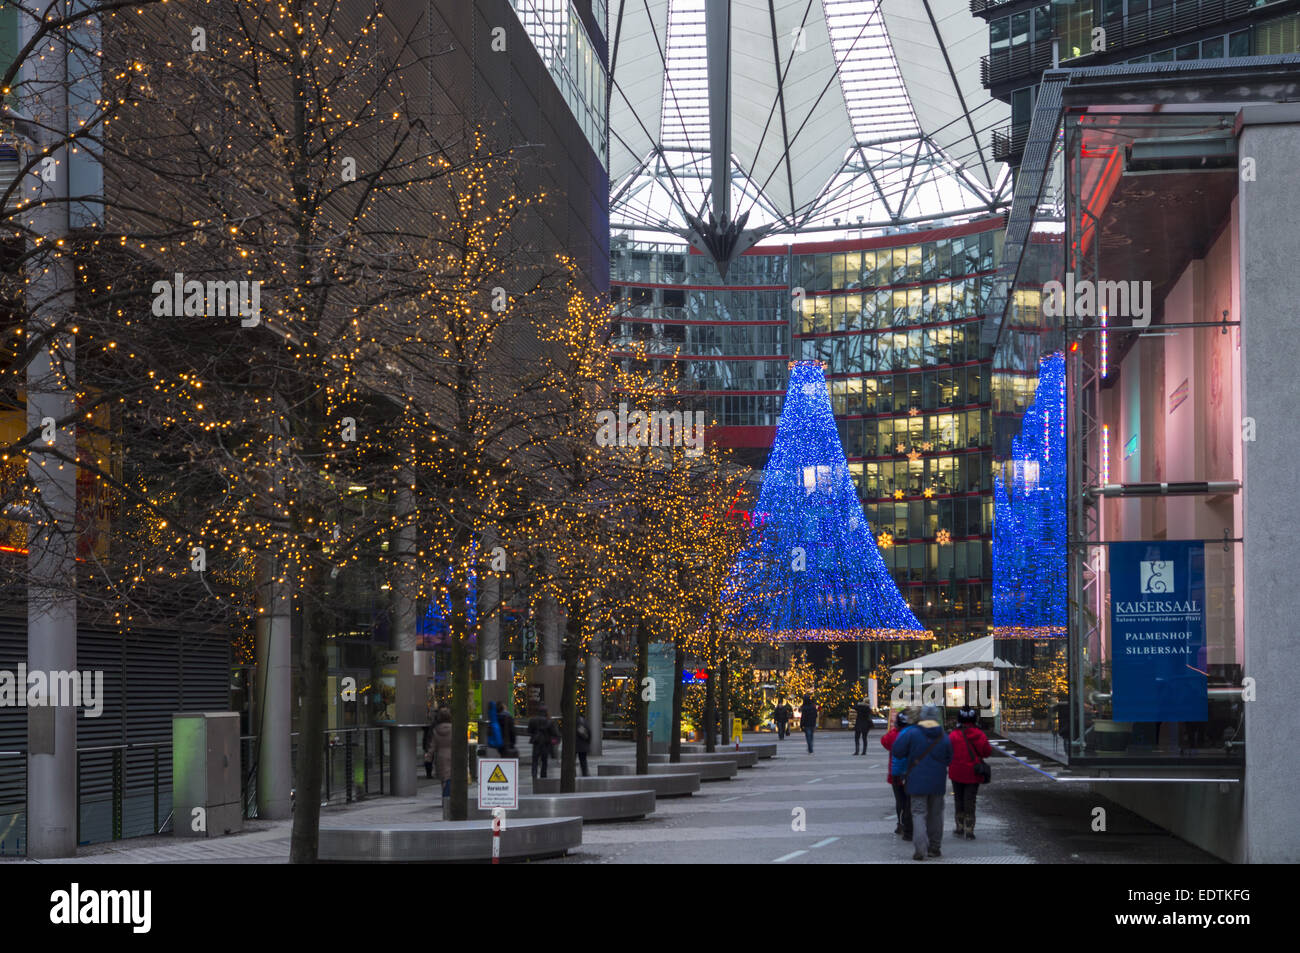 Weihnachten im il Sony Center am Potsdamer Platz di Berlino, Deutschland ,Natale per il Sony Center di Potsdamer Platz, Germania,ber Foto Stock